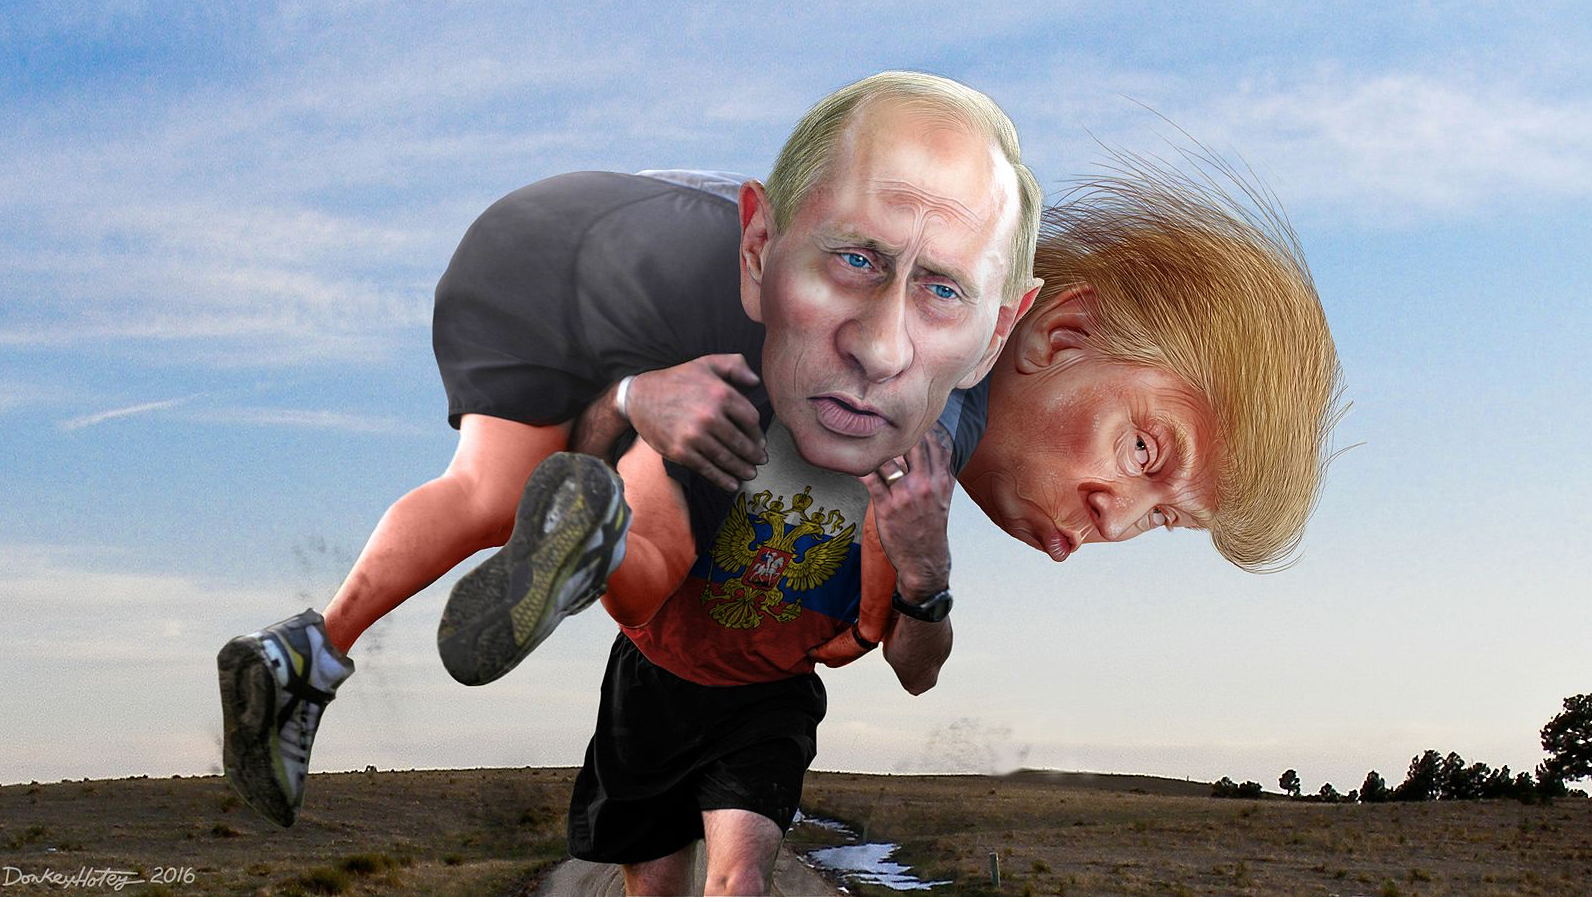 n Kumpel Bild: CC By DonkeyHotey (Vladimir Putin carrying his buddy Donald Trump) [CC BY-SA 2.0 (https:::creativecommons.org:licenses:by-sa:2.0)], via Wikimedia Commons